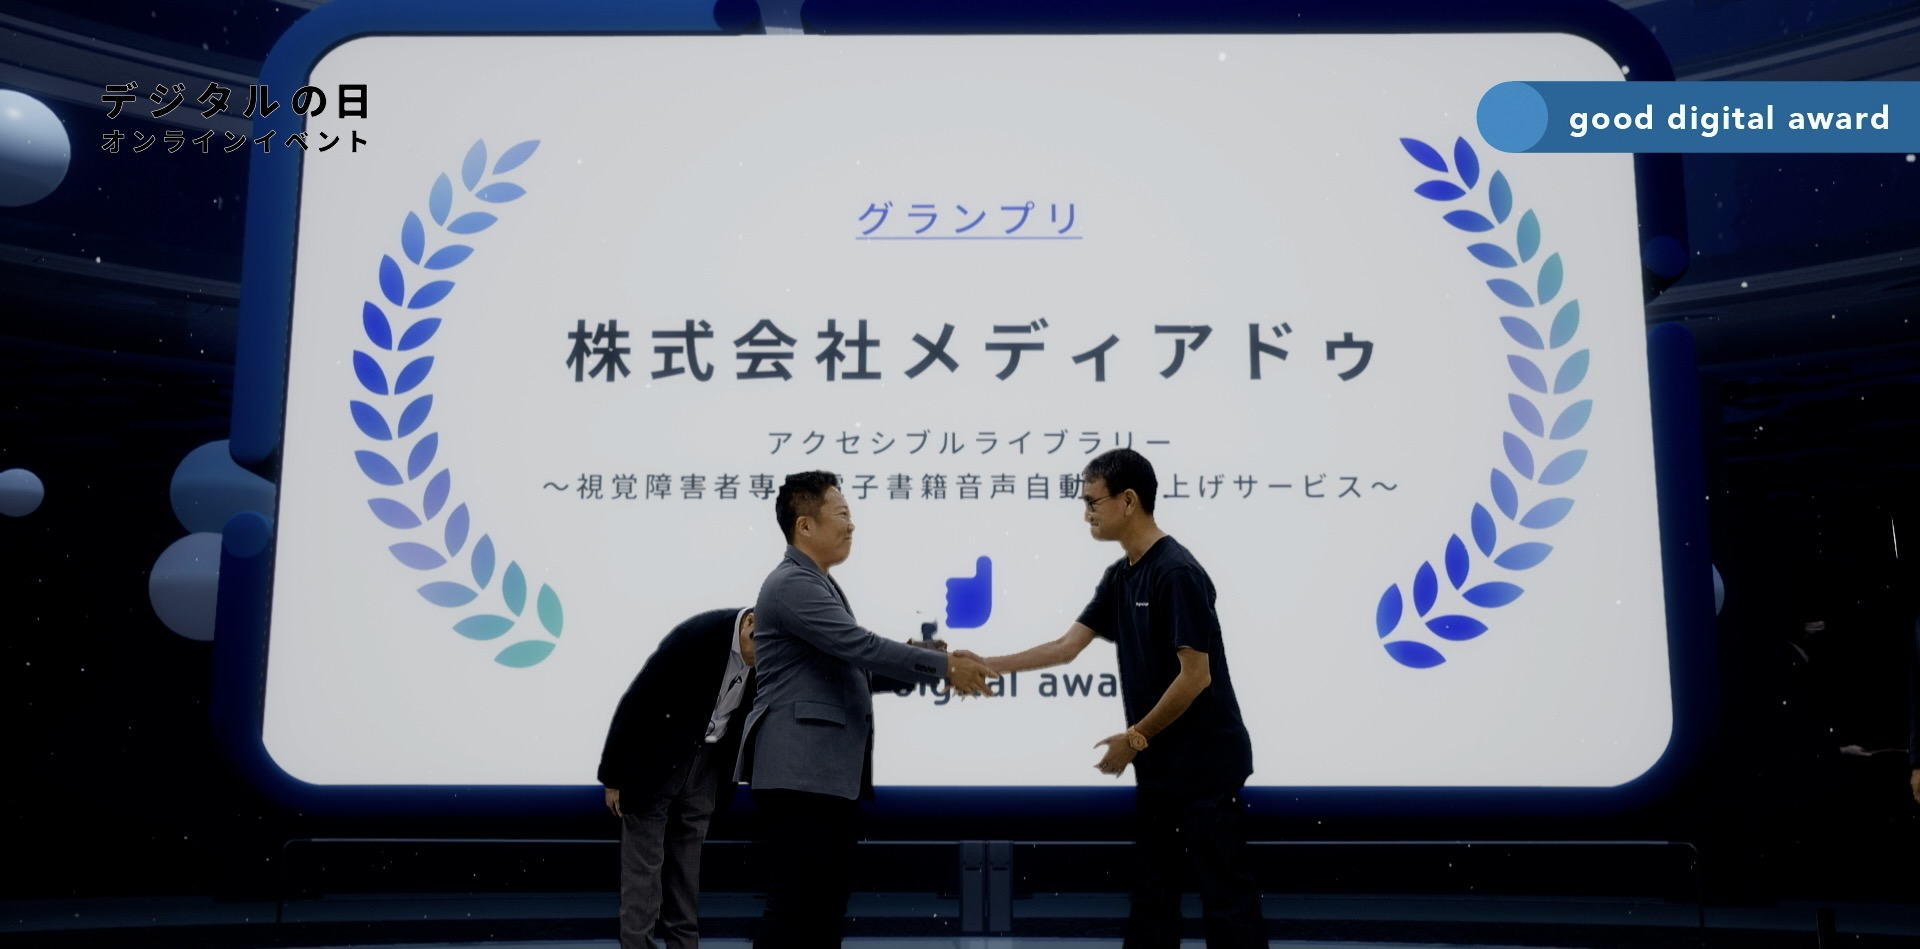 good digital award 2022グランプリを受賞した株式会社メディアドゥ代表者が表彰されている様子。画面の中央に代表者と河野大臣が向かい合っていて握手している。